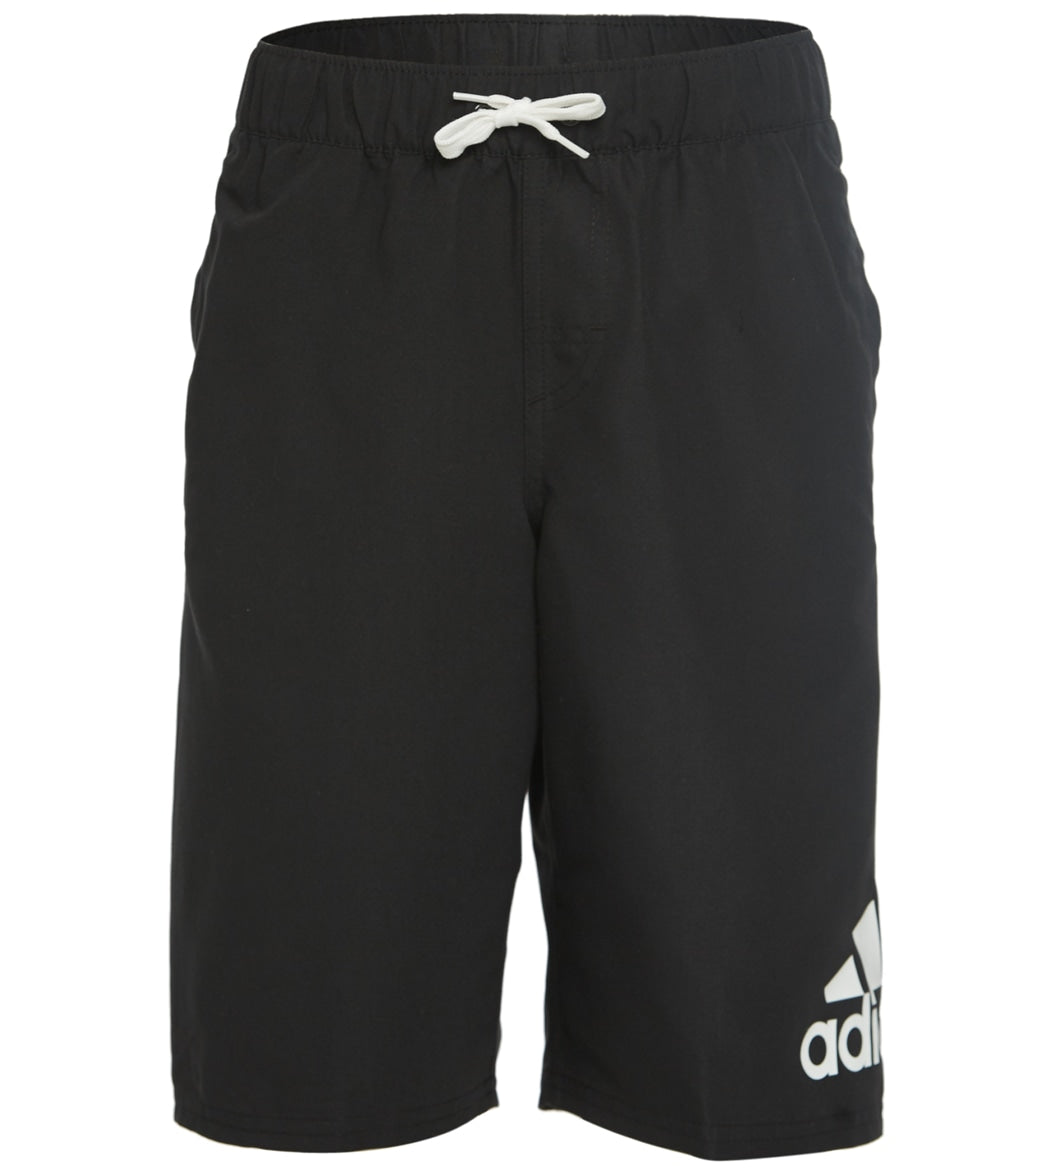 Adidas Boys' Logo Mania Volley Short Big Kid - Black/White Small - Swimoutlet.com